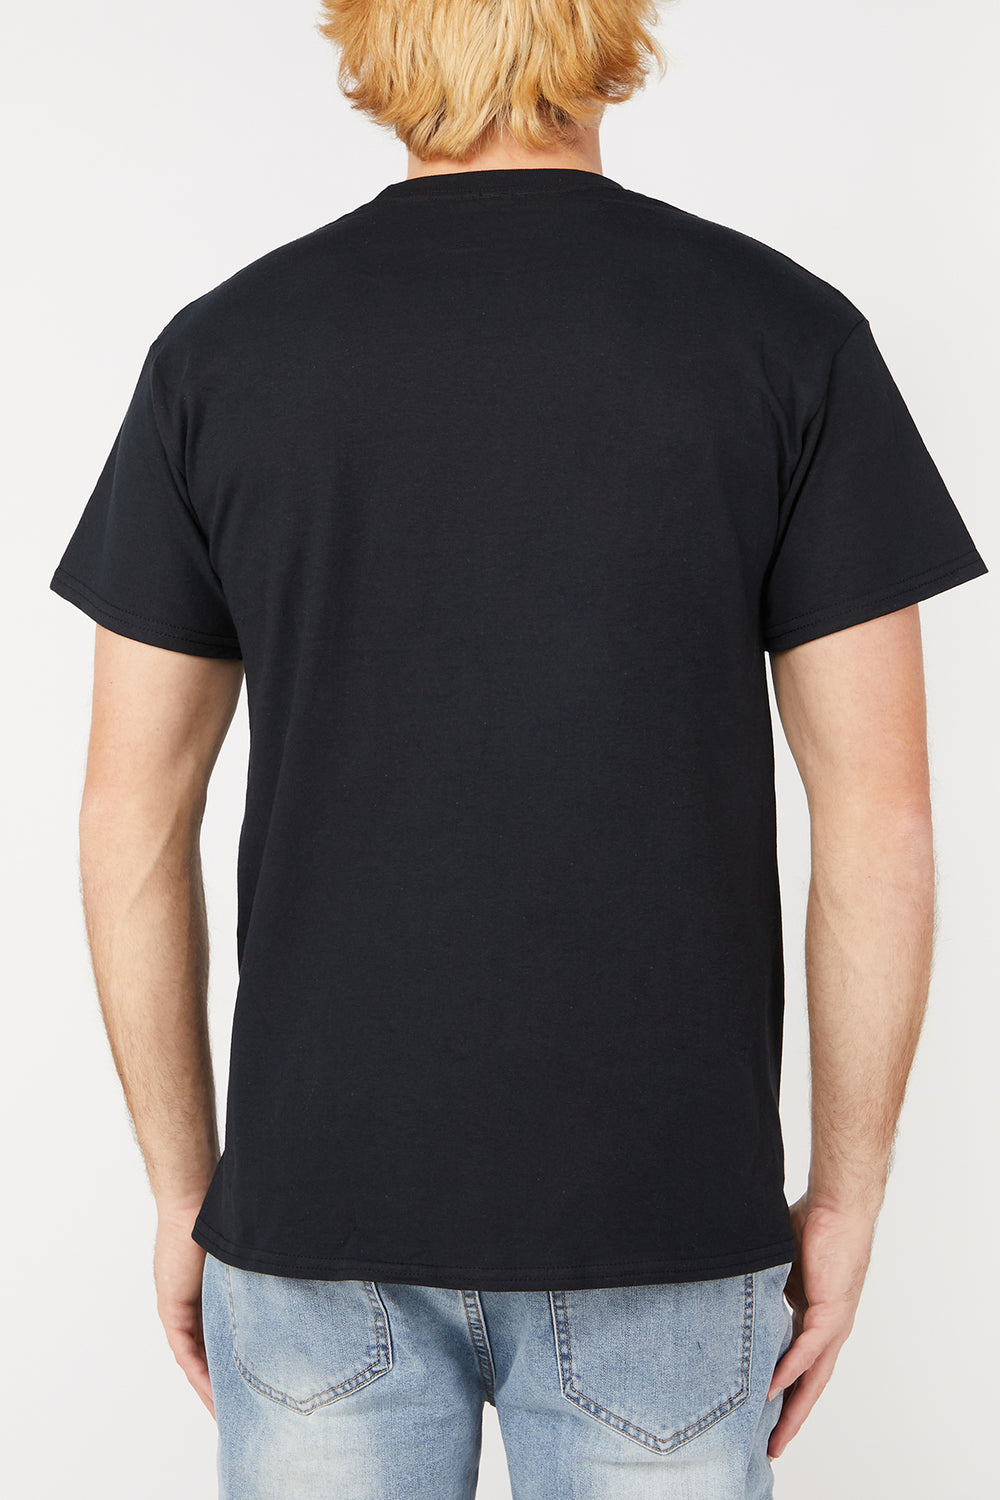 T-Shirt Noir Logo Flammes Thrasher Homme Noir